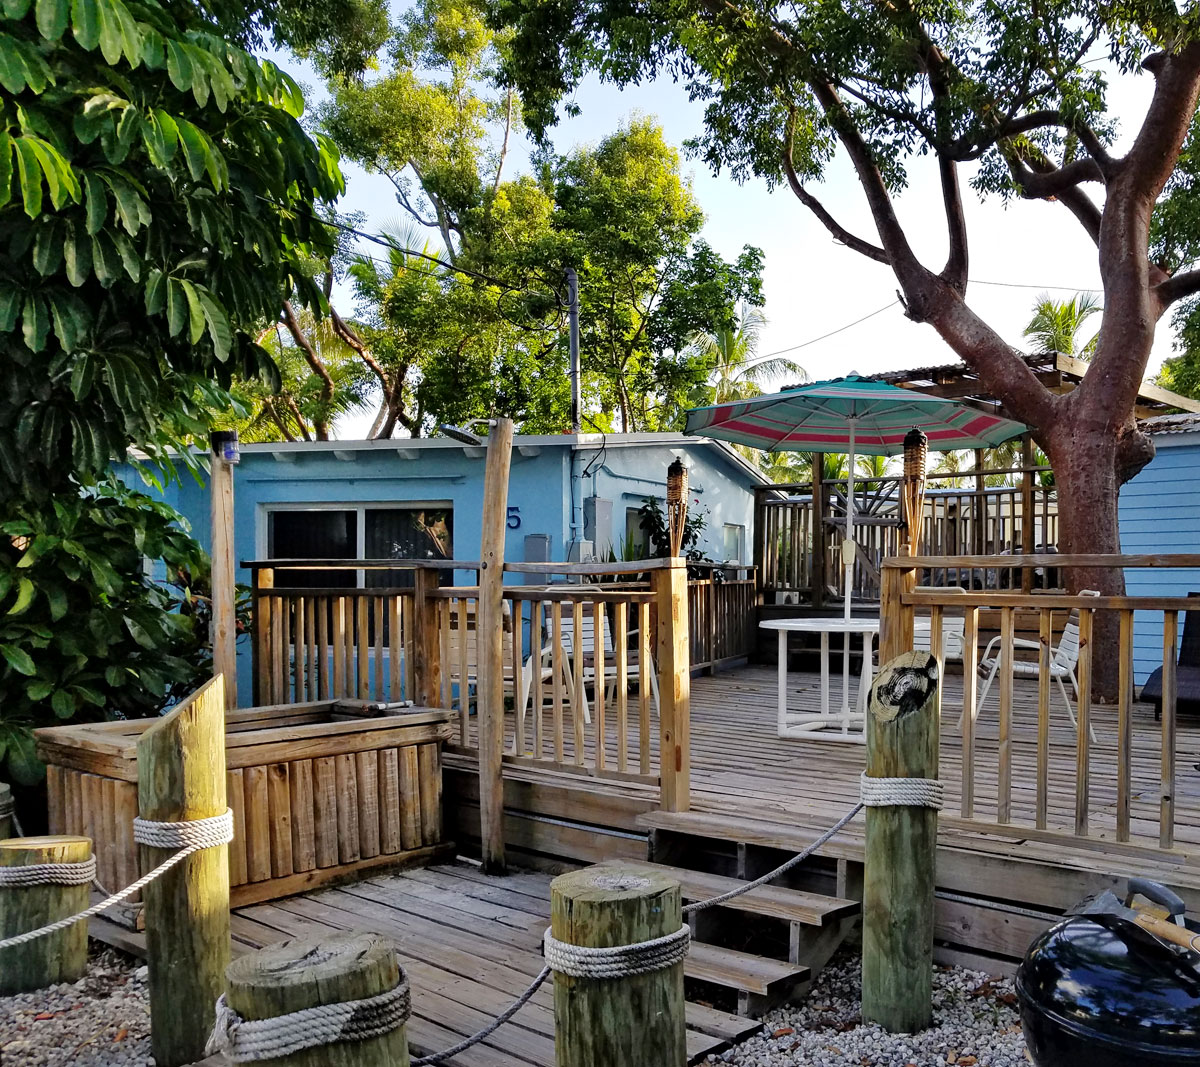 Seafarer Beach Resort, Key Largo, cottage and deck